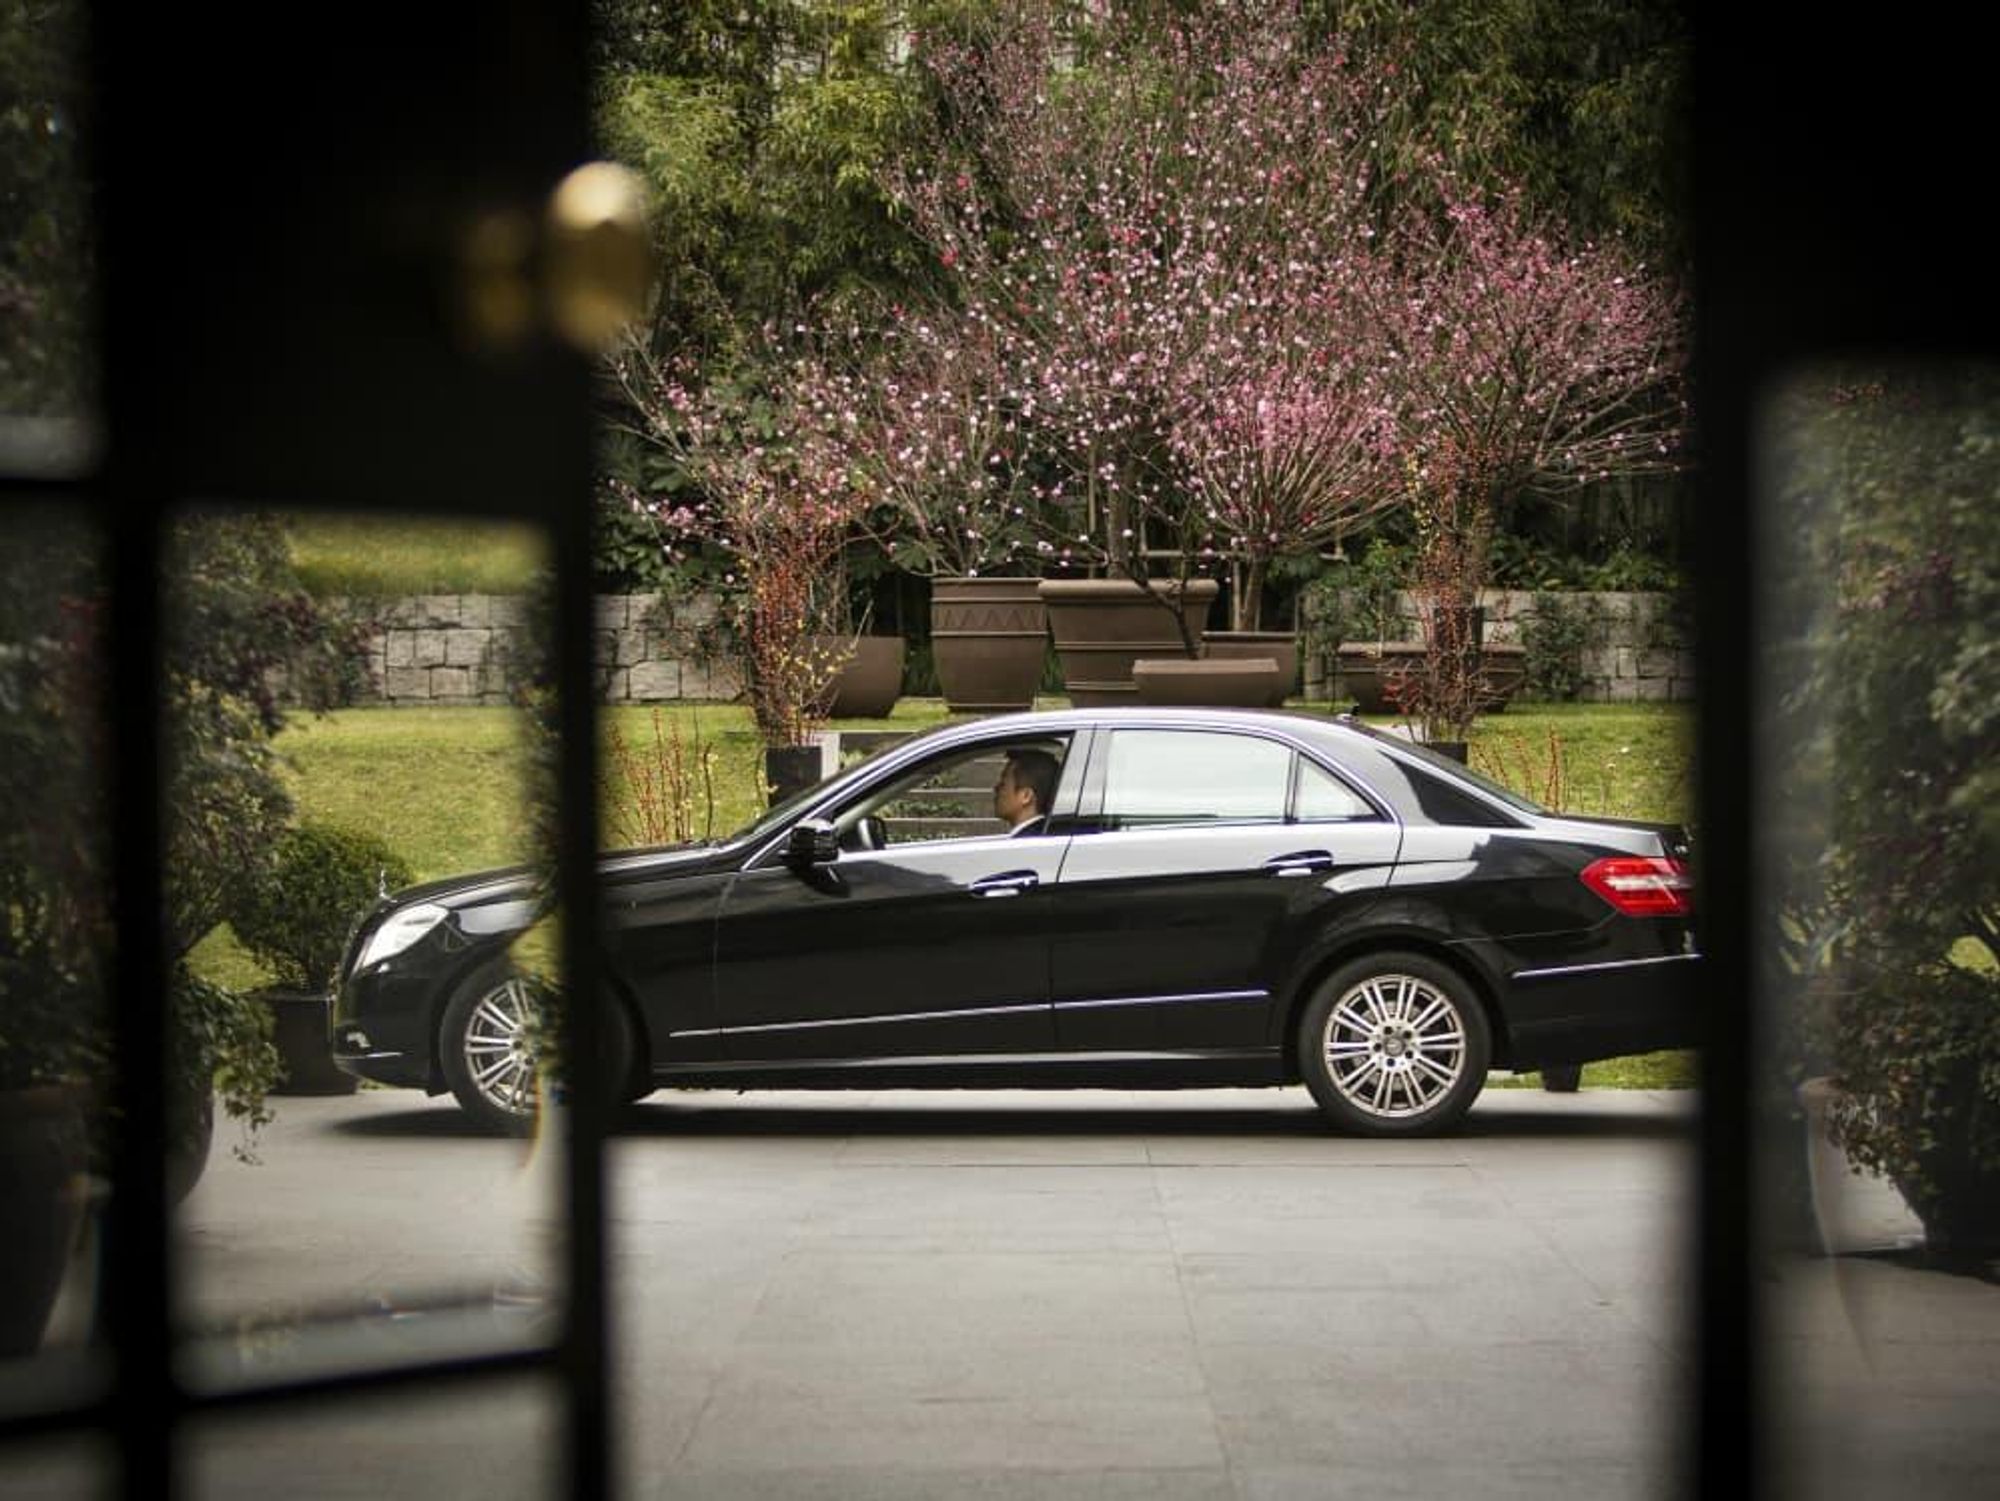 UberLUX lux black car luxury vehicle ride sharing service 2015